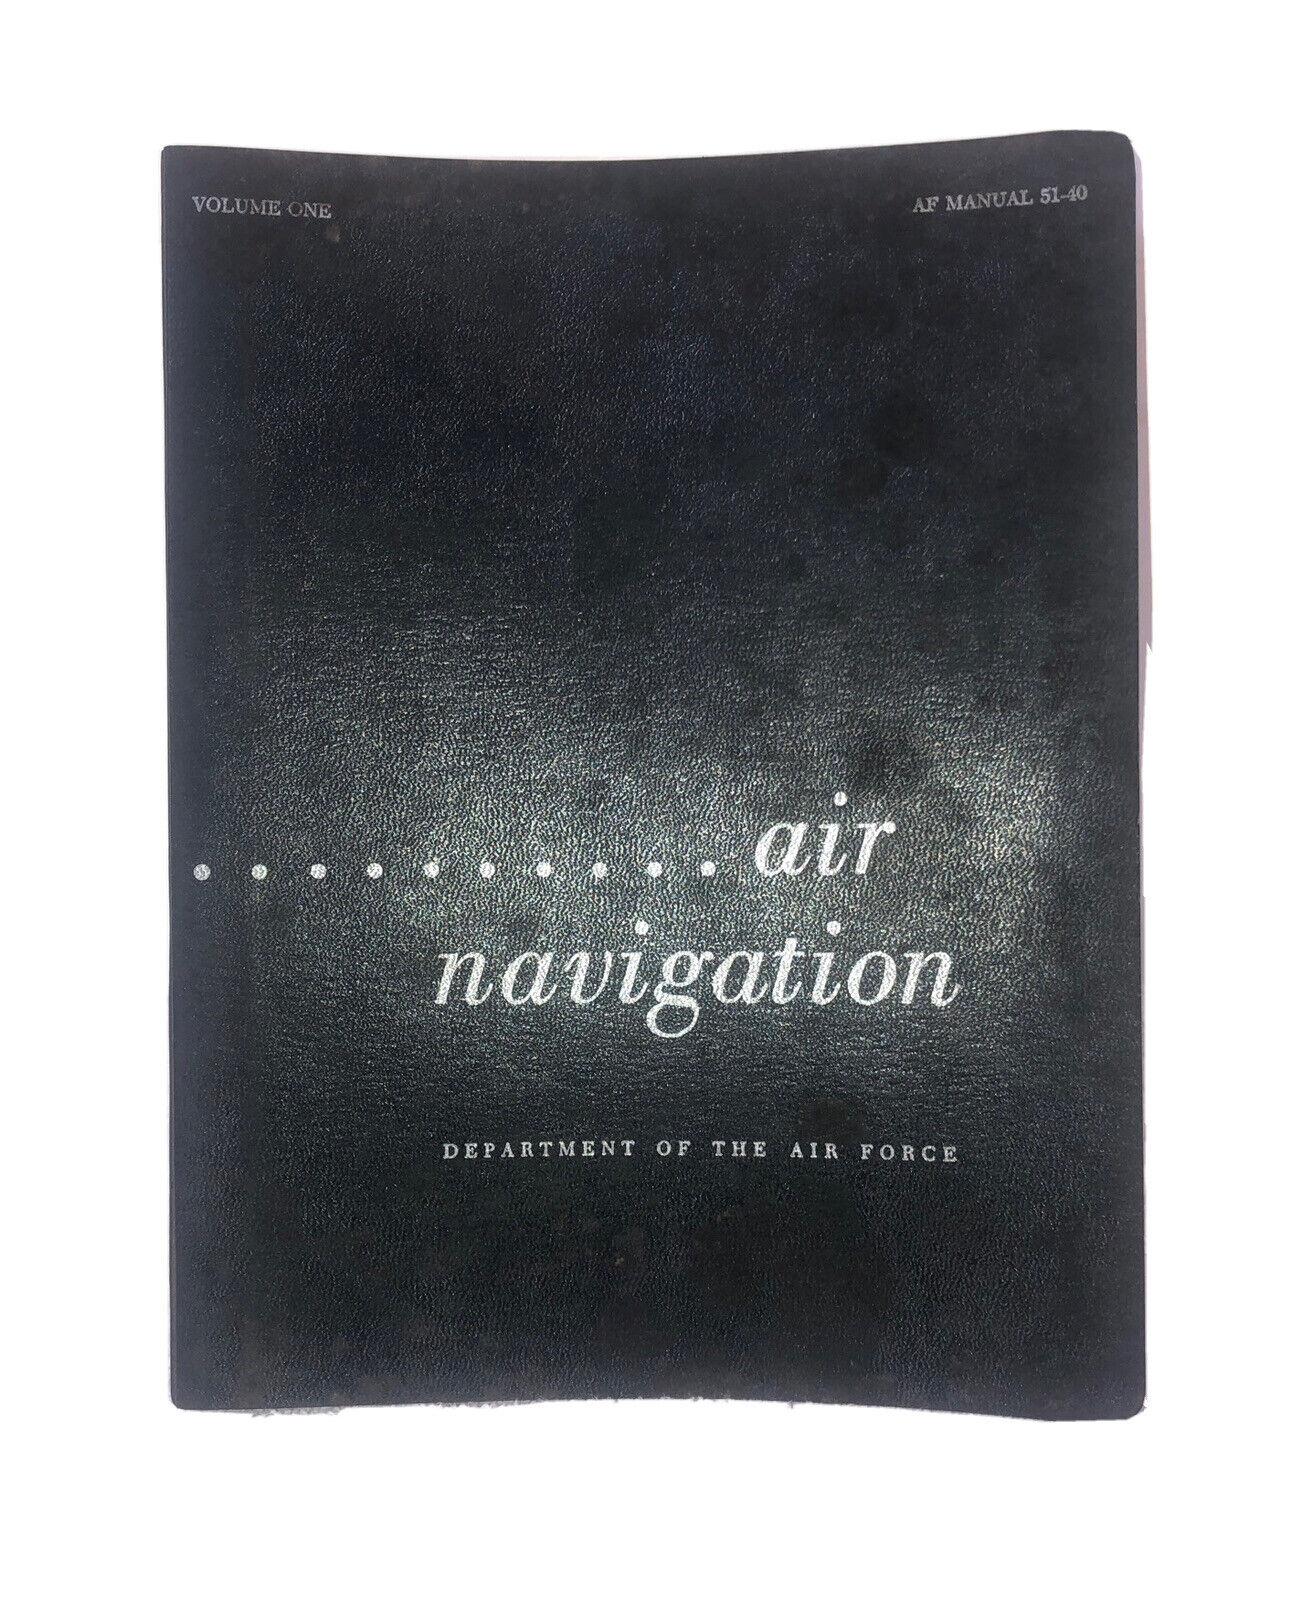 Vintage 1954 U.S.A. Department of the Air Force Air Navigational Manual Original